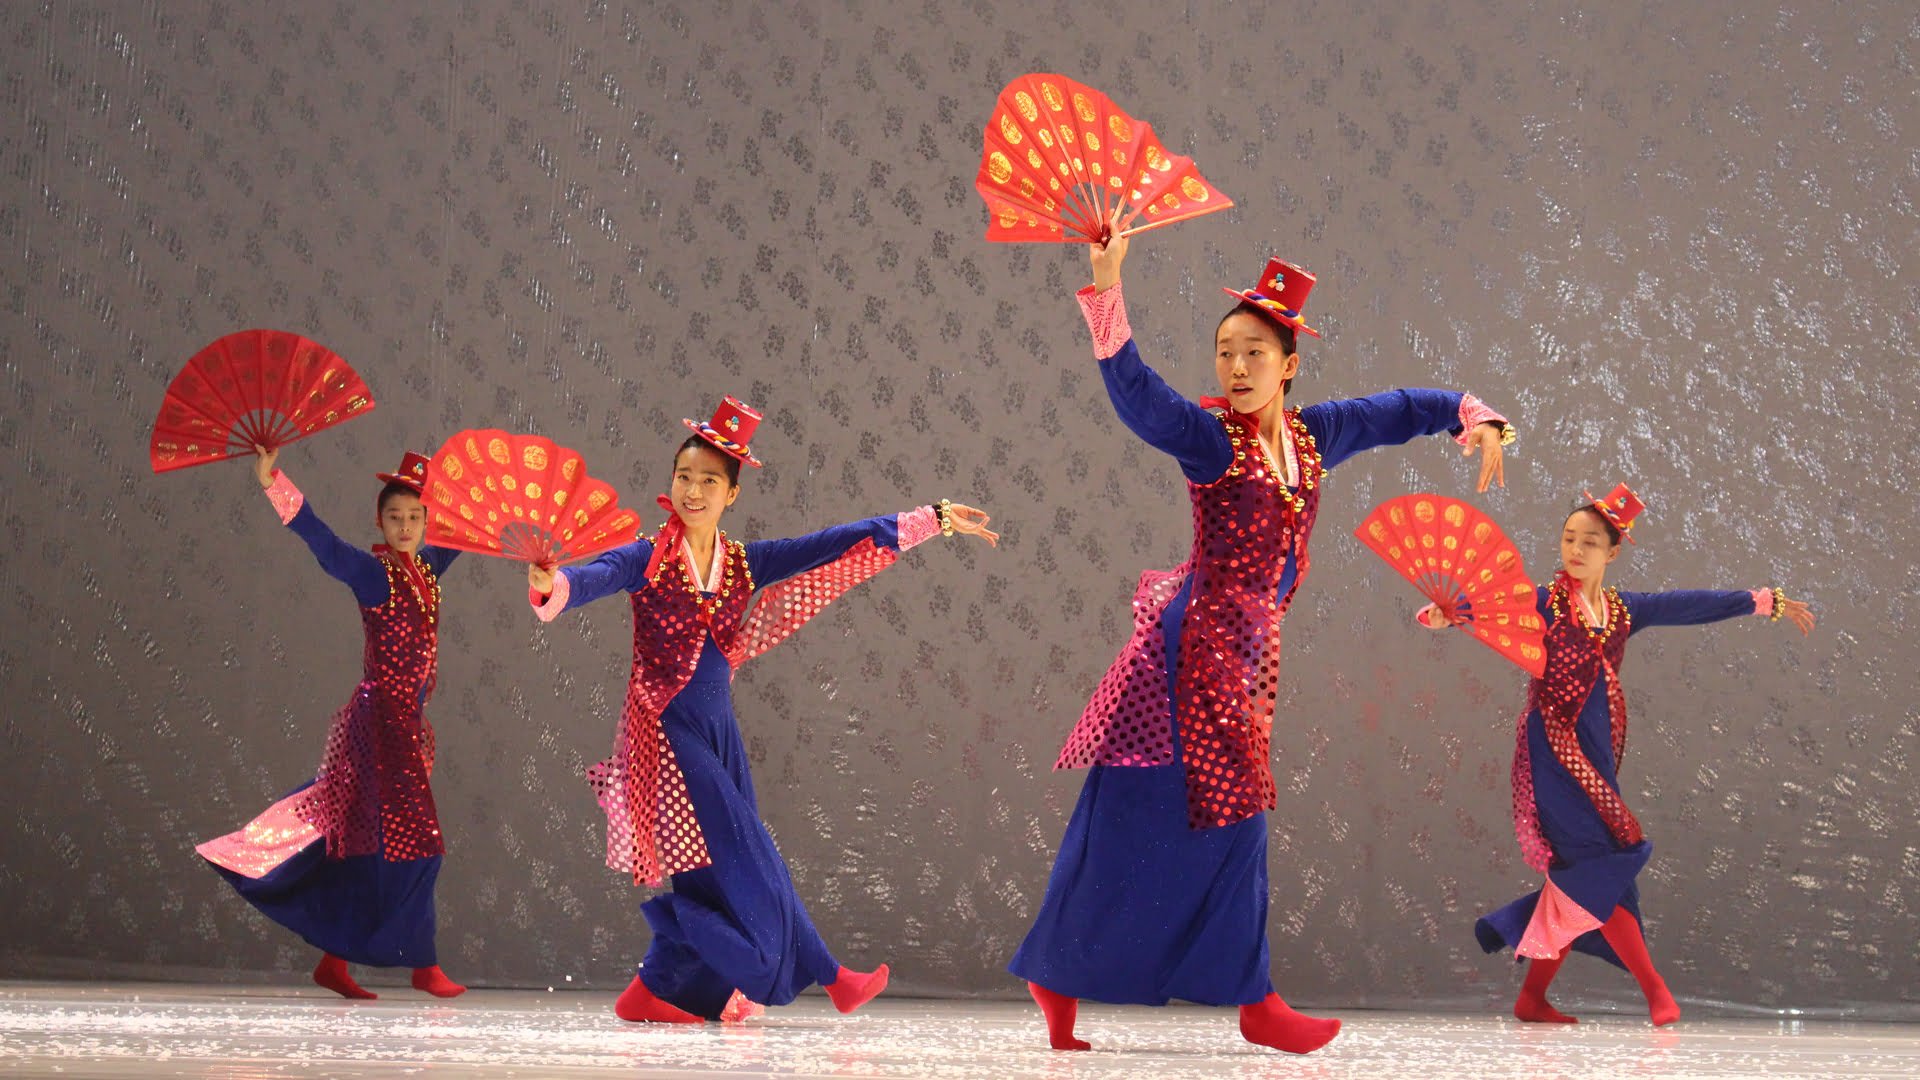 Eun-Me Ahn - North Korea Dance